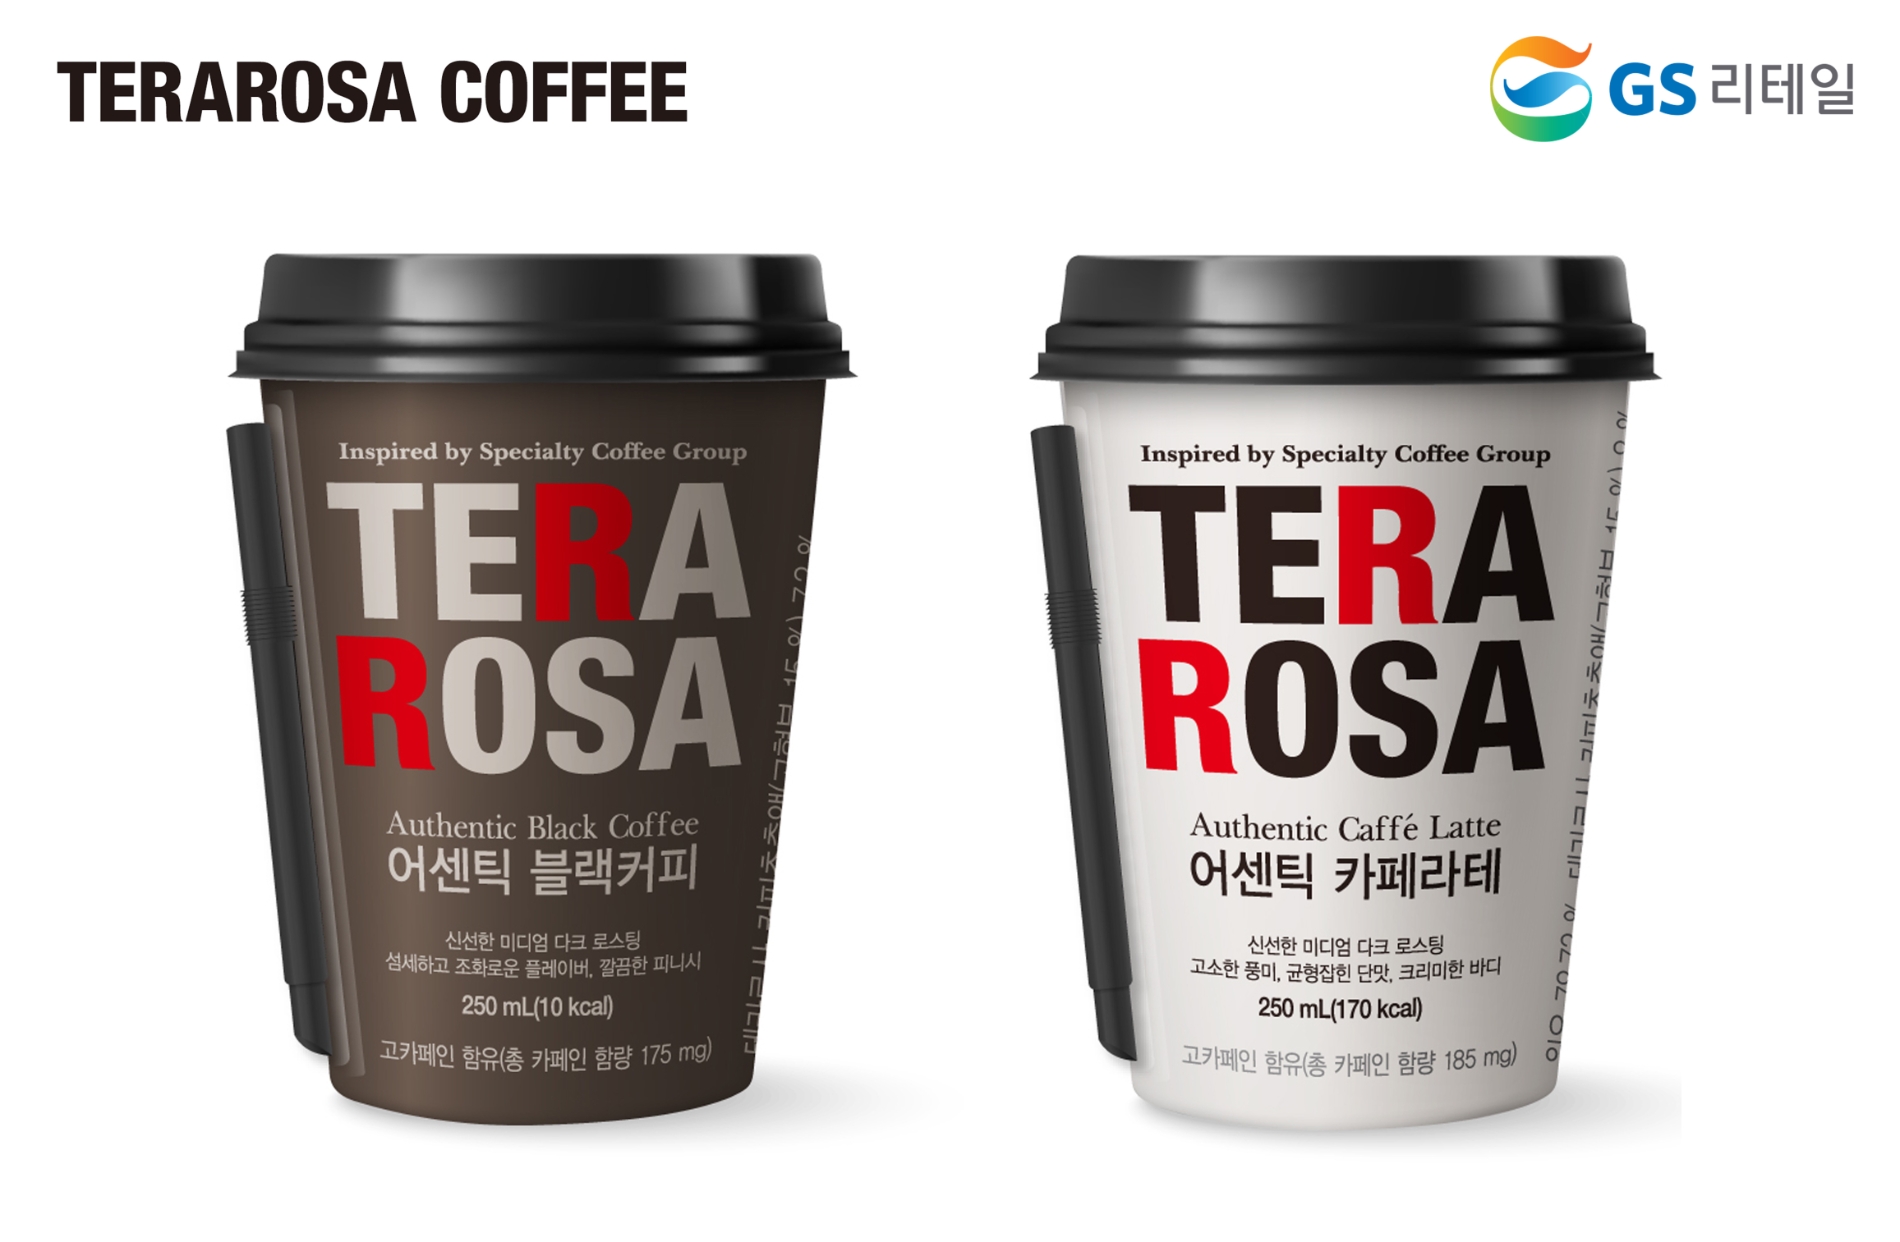 GS리테일 X 테라로사, 컬래버 상품 출시로 스페셜티 커피 대중화에 나선다